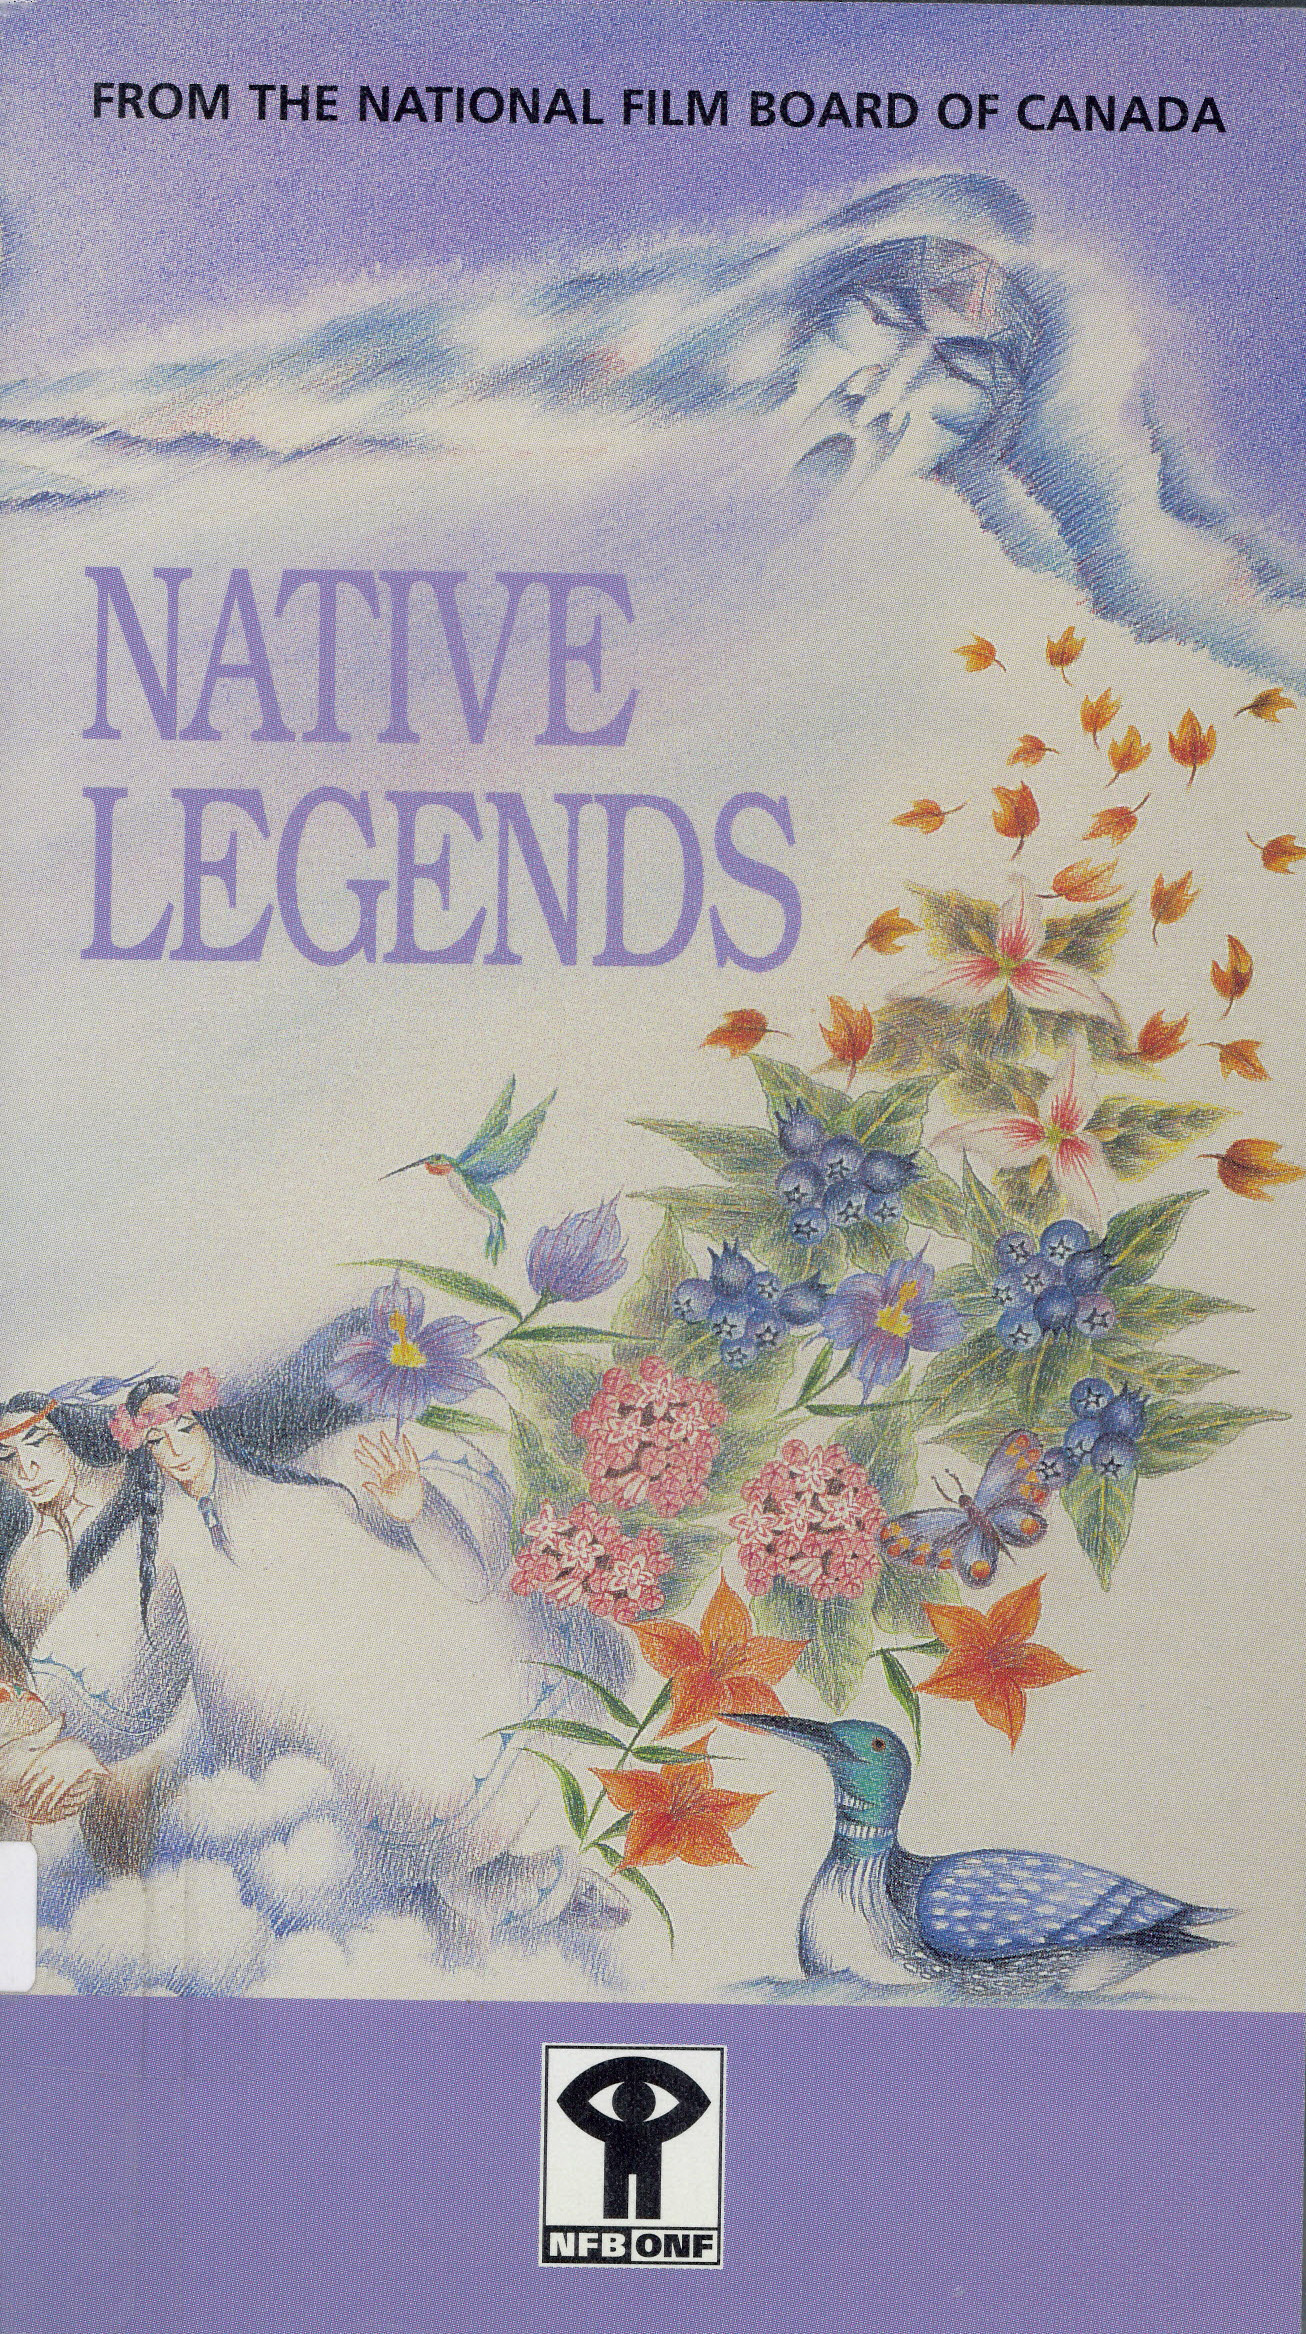 Native legends